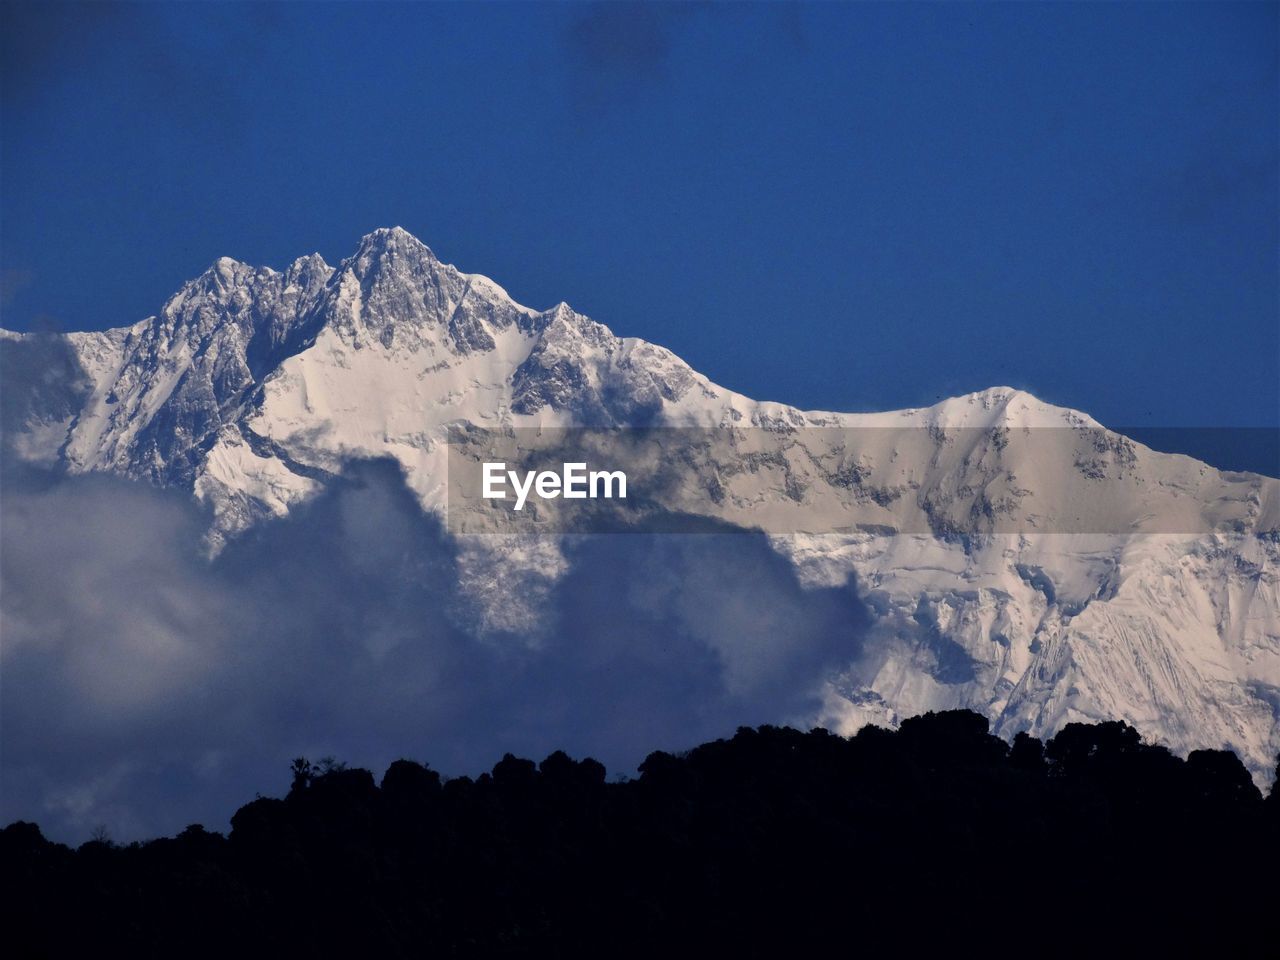 Kanchanjangha - the third highest peak in the world